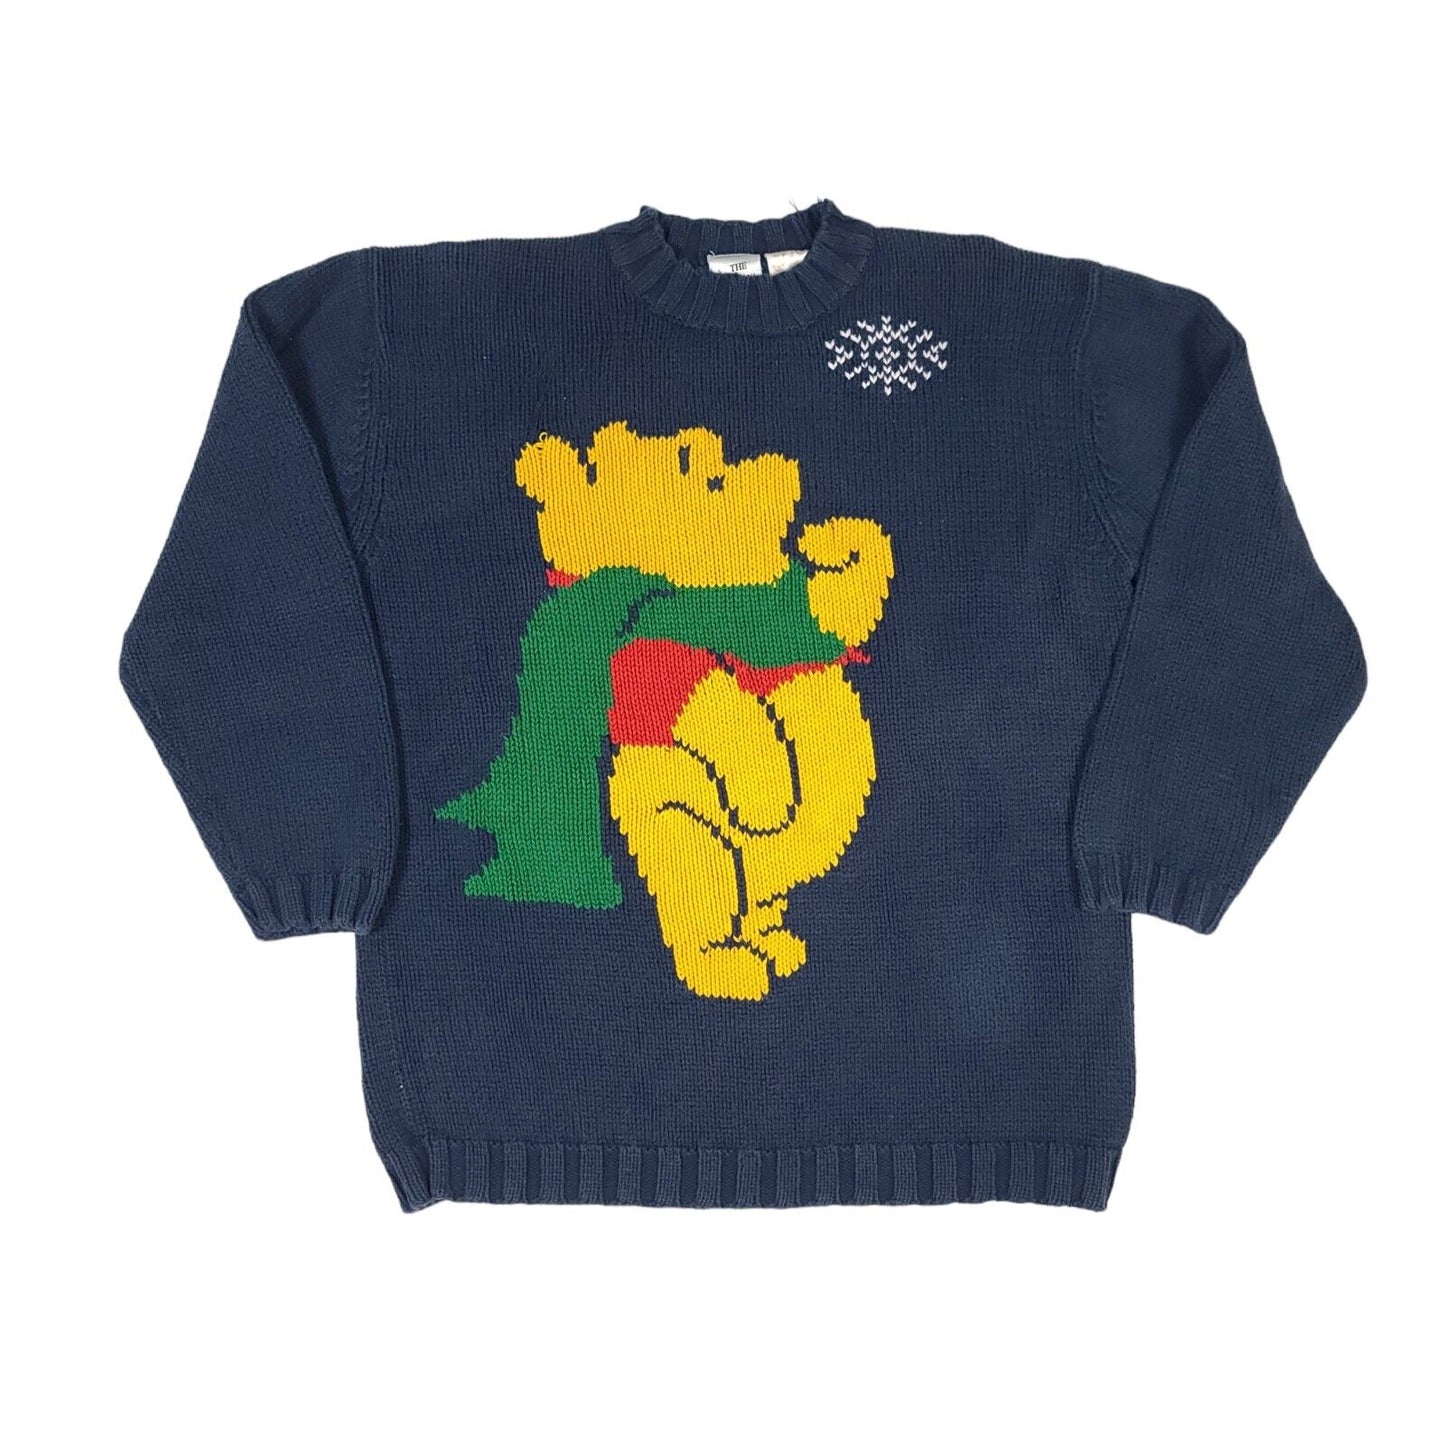 Winnie The Pooh Disney Store Navy Blue Knit Sweater